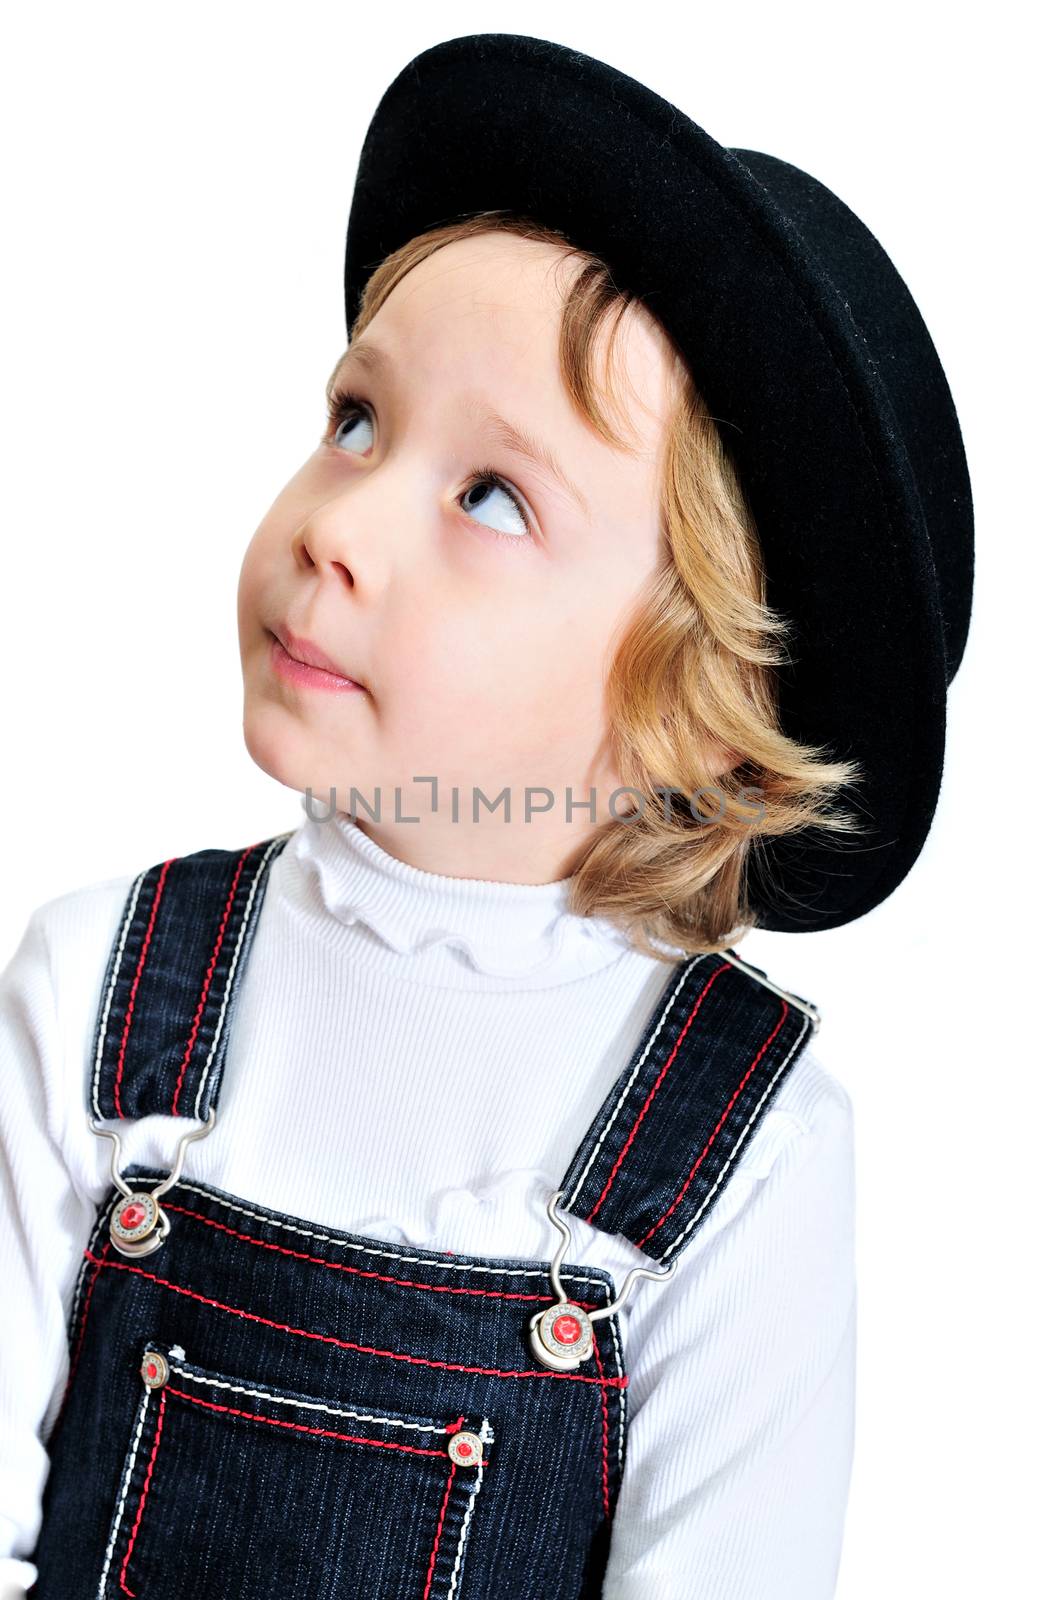  stylish funny little girl wearing black hat